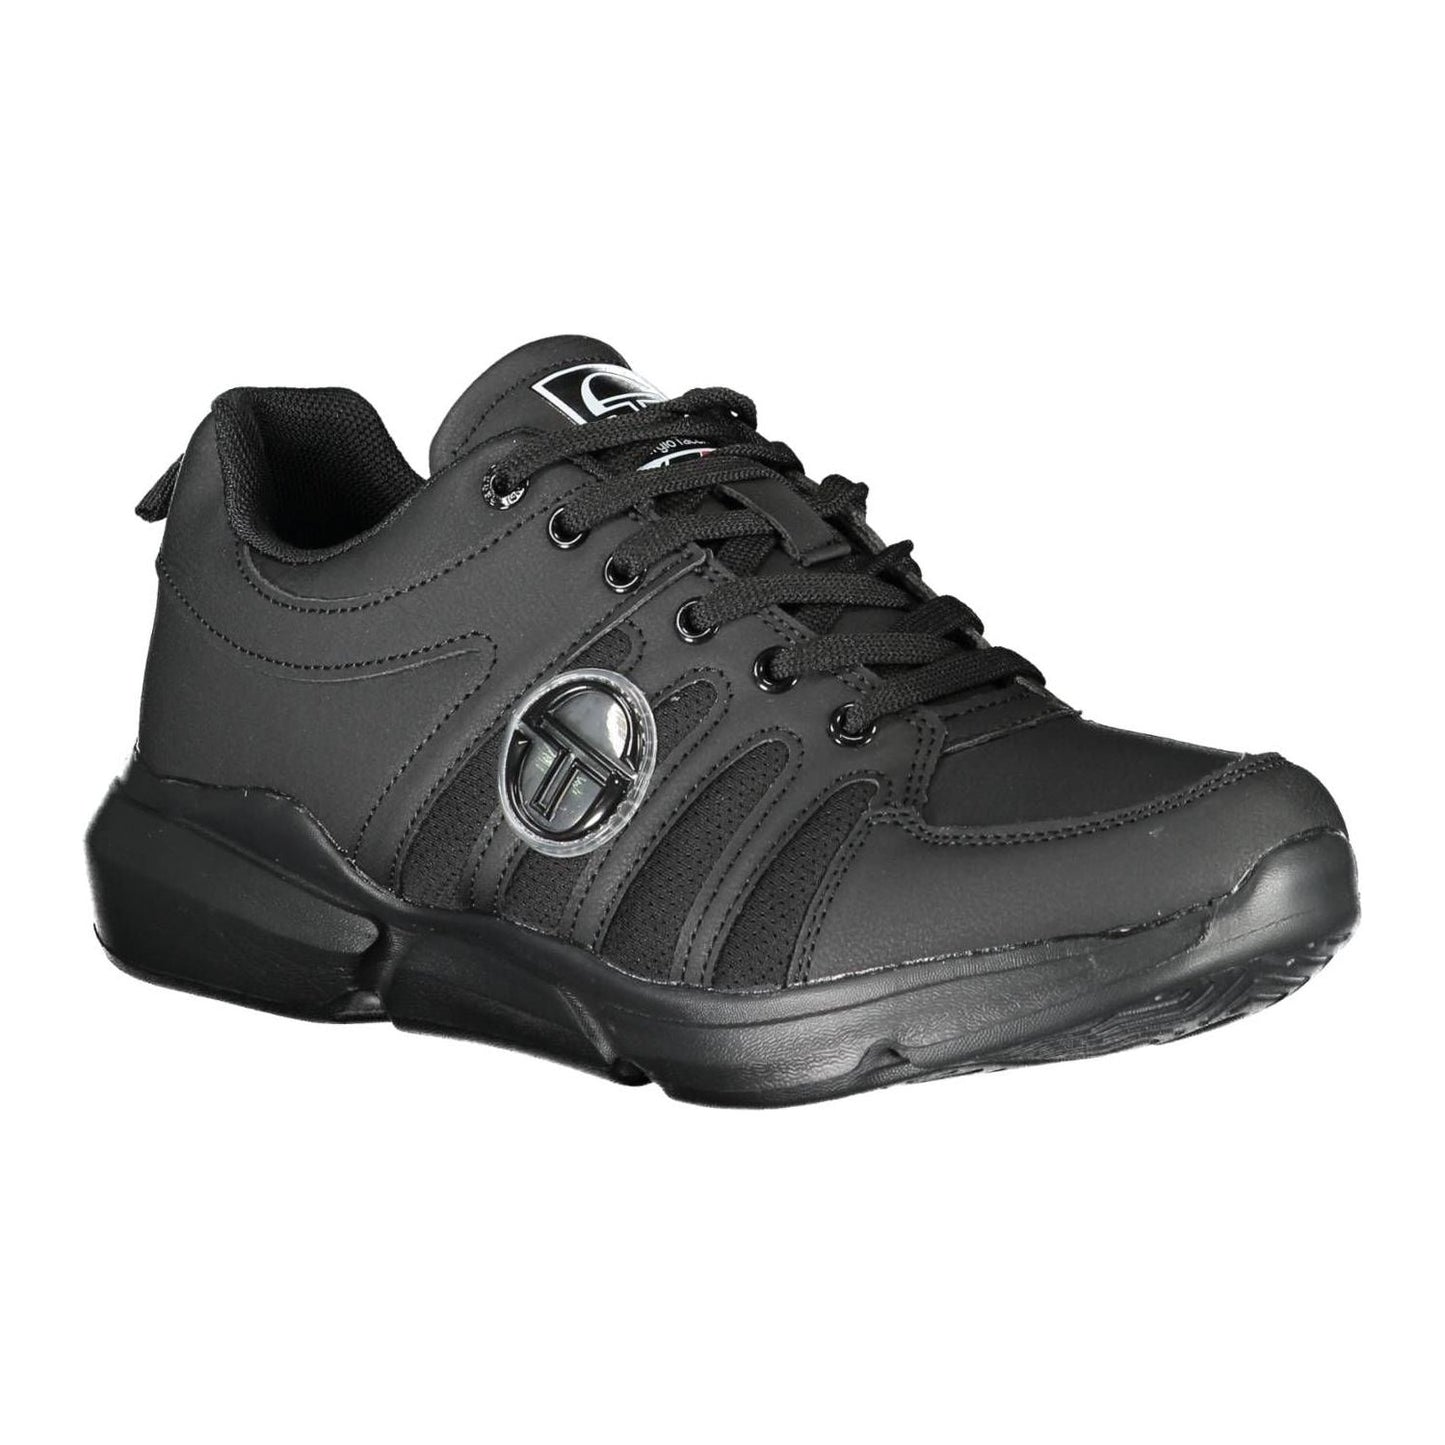 Sergio Tacchini Sleek Black Sports Sneakers with Contrasting Details sleek-black-sports-sneakers-with-contrasting-details